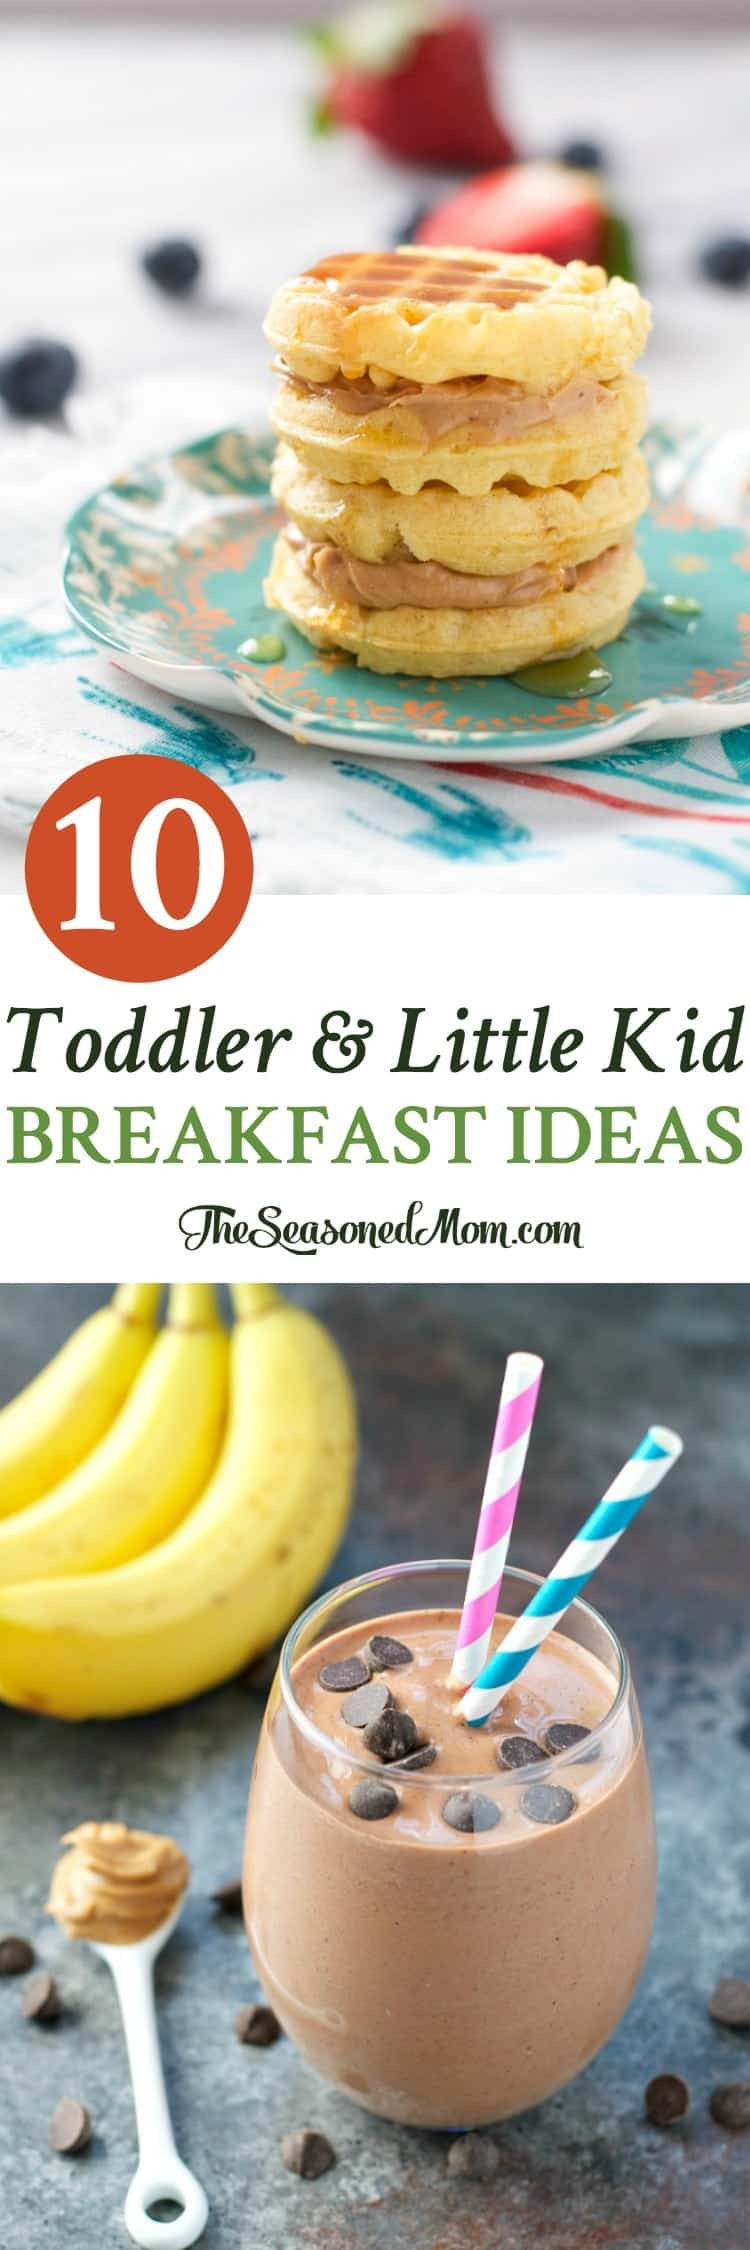 Recipes For Little Kids
 10 Toddler and Little Kid Breakfast Ideas The Seasoned Mom